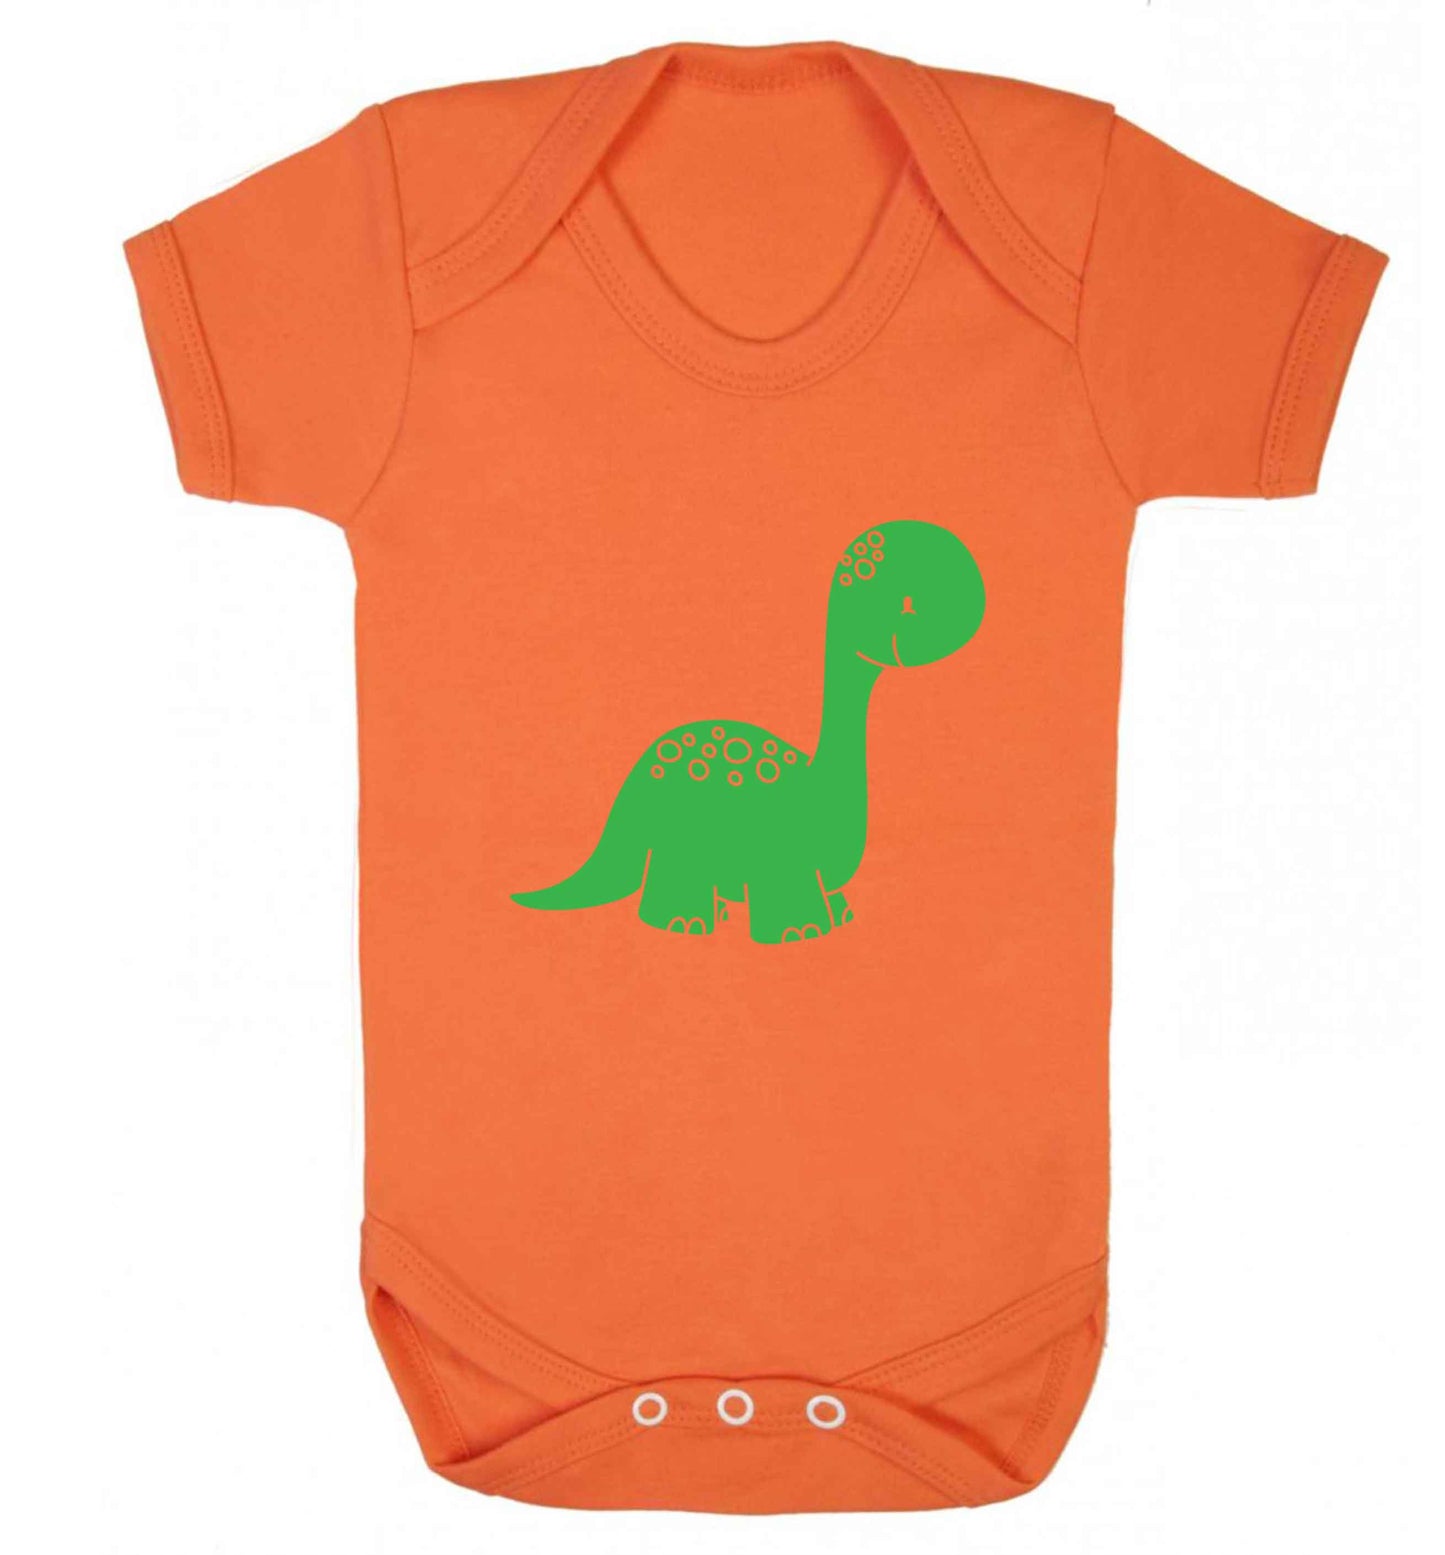 Dinosaur illustration baby vest orange 18-24 months